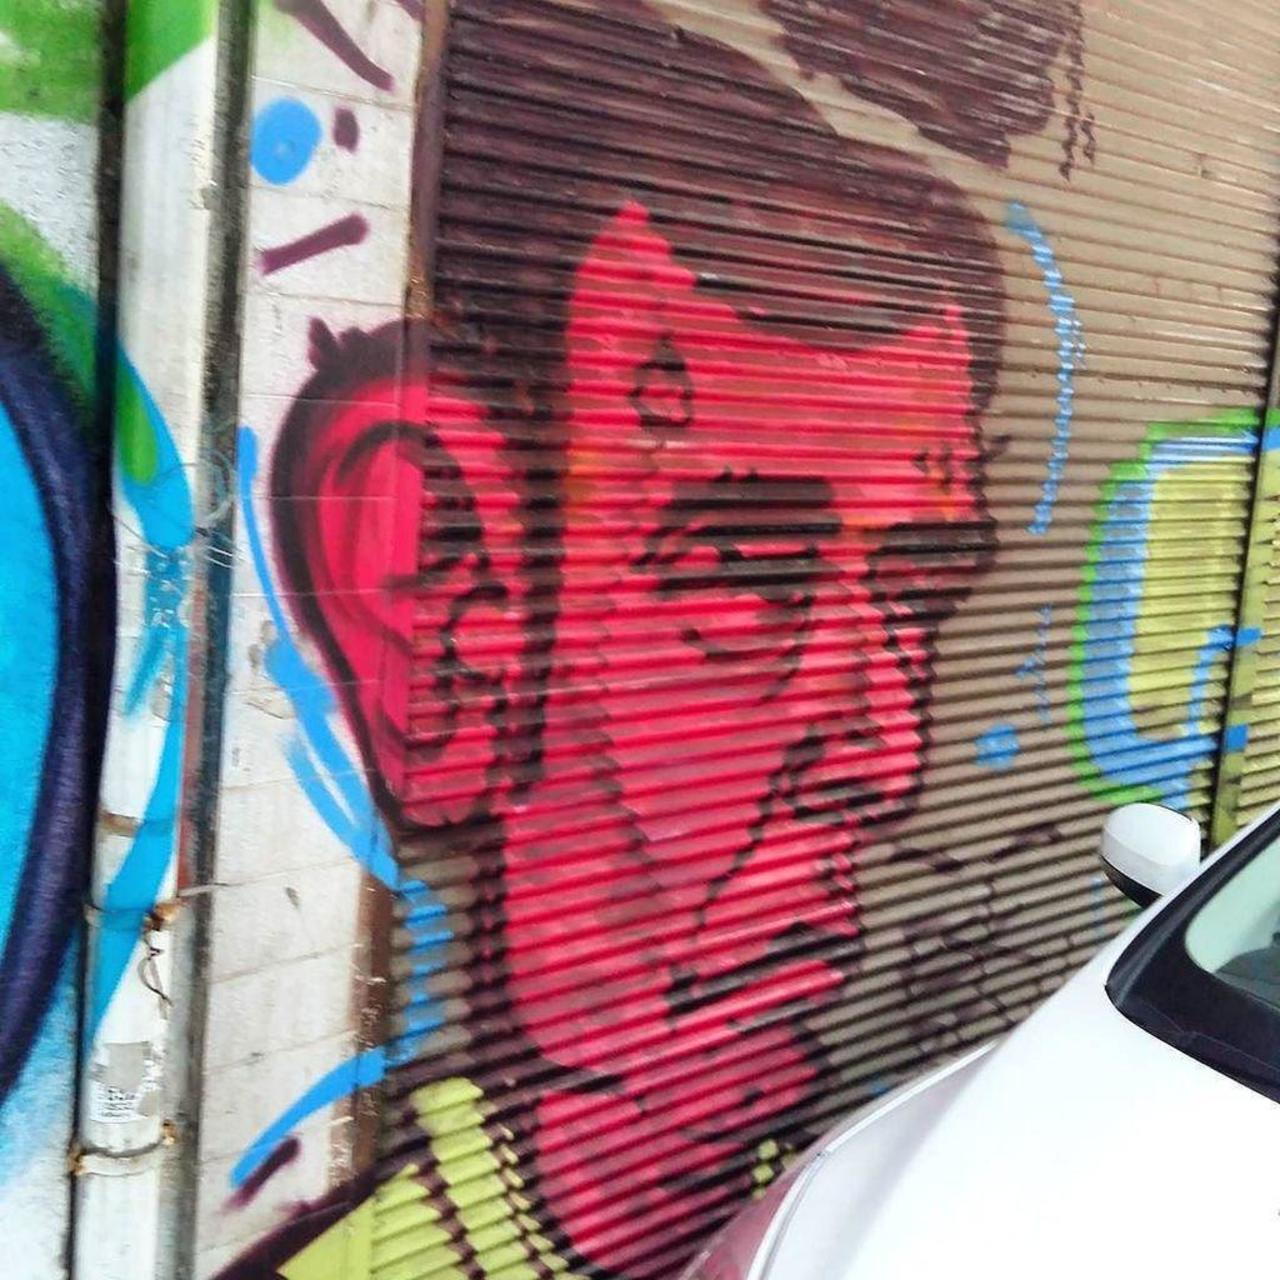 By @eskreyn @dsb_graff #dsb_graff @rsa_graffiti @streetawesome #streetart #urbanart #graffitiart #graffiti #streeta… http://t.co/WCE3swnpOJ